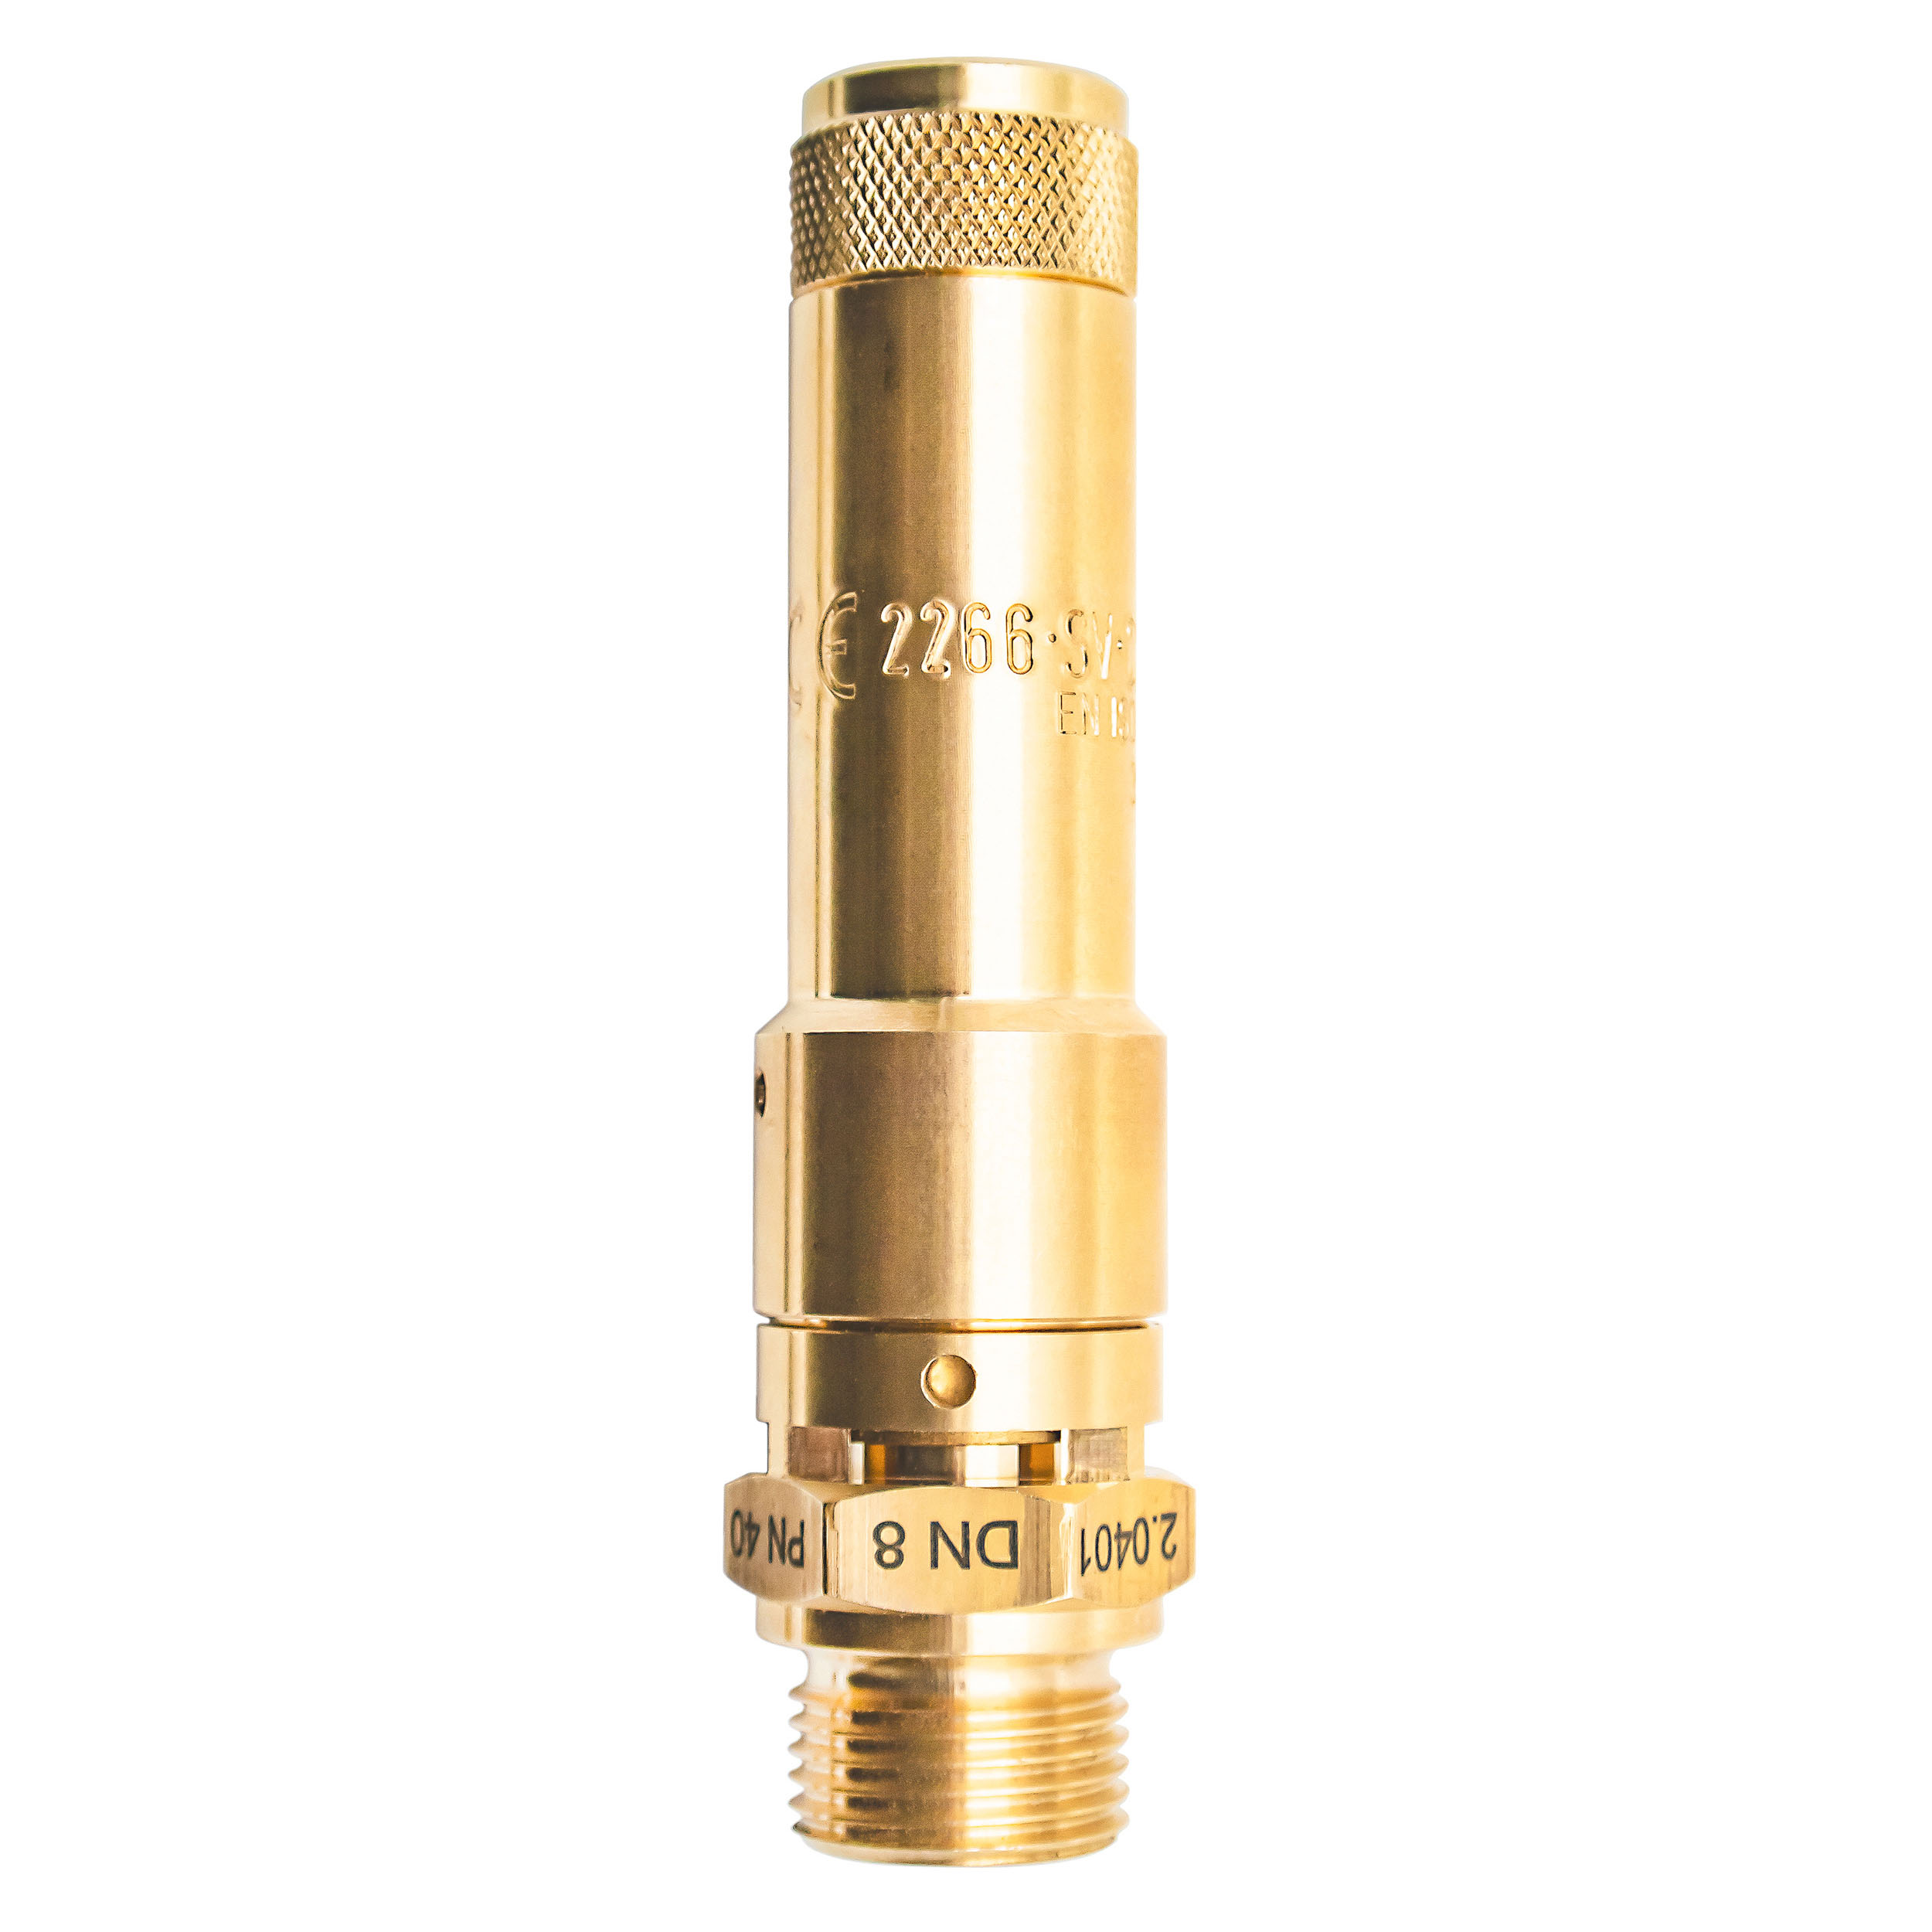 Savety valve component tested DN 8, G½, set pressure: 1.6 bar (23,2 psi)